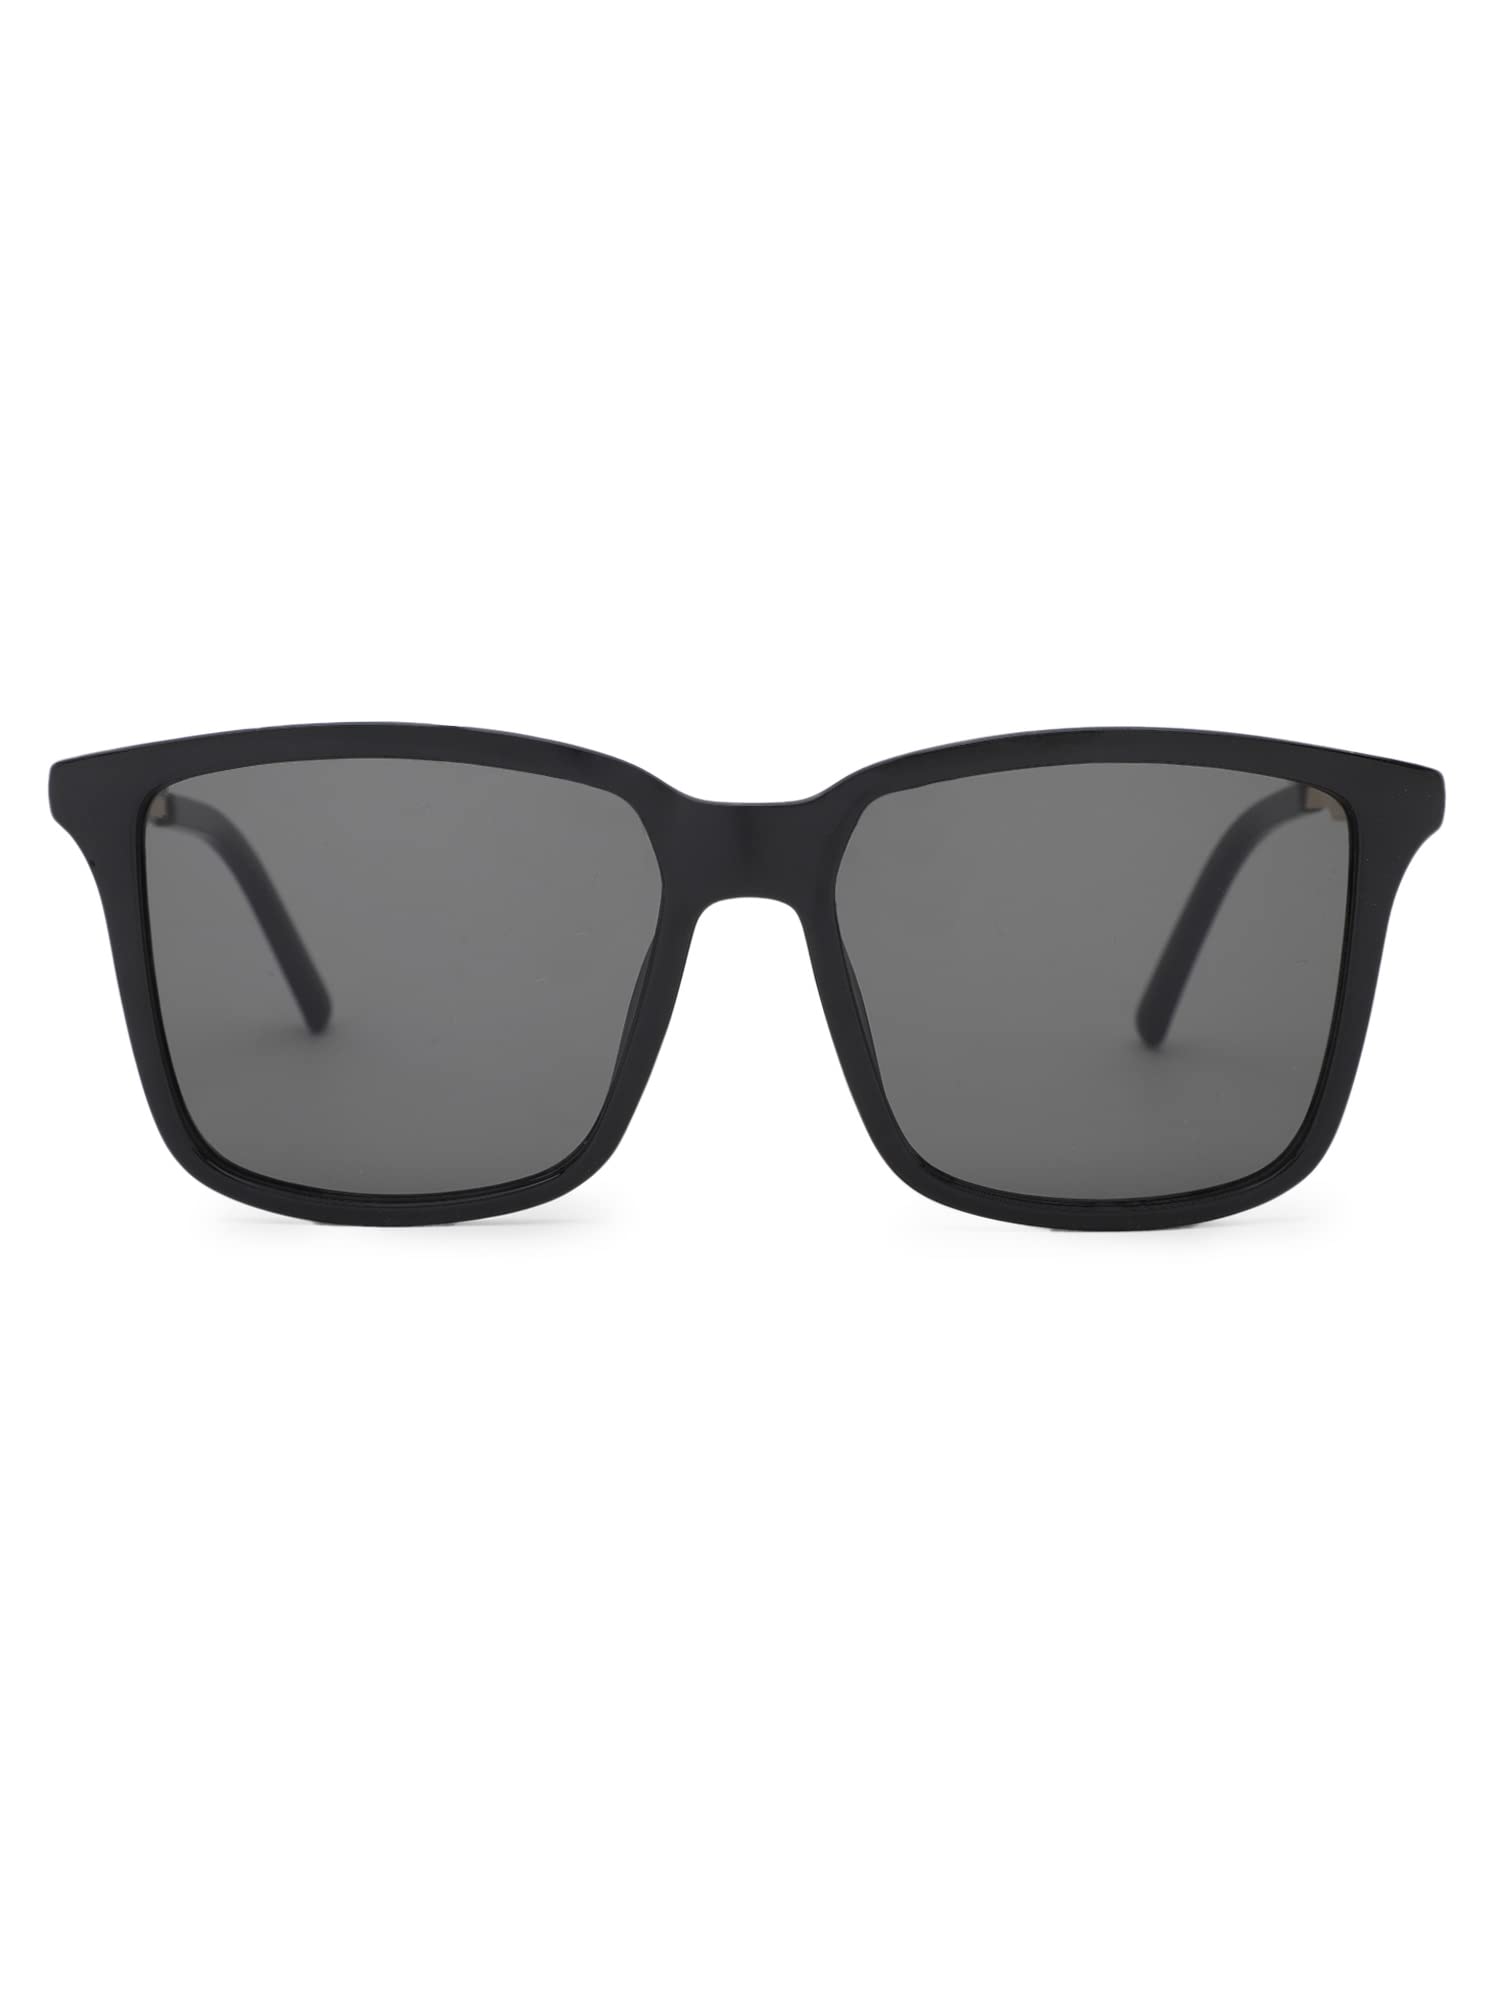 Intellilens Square UV Protected Gold & Black Square Shaped Sunglasses For Men & Women